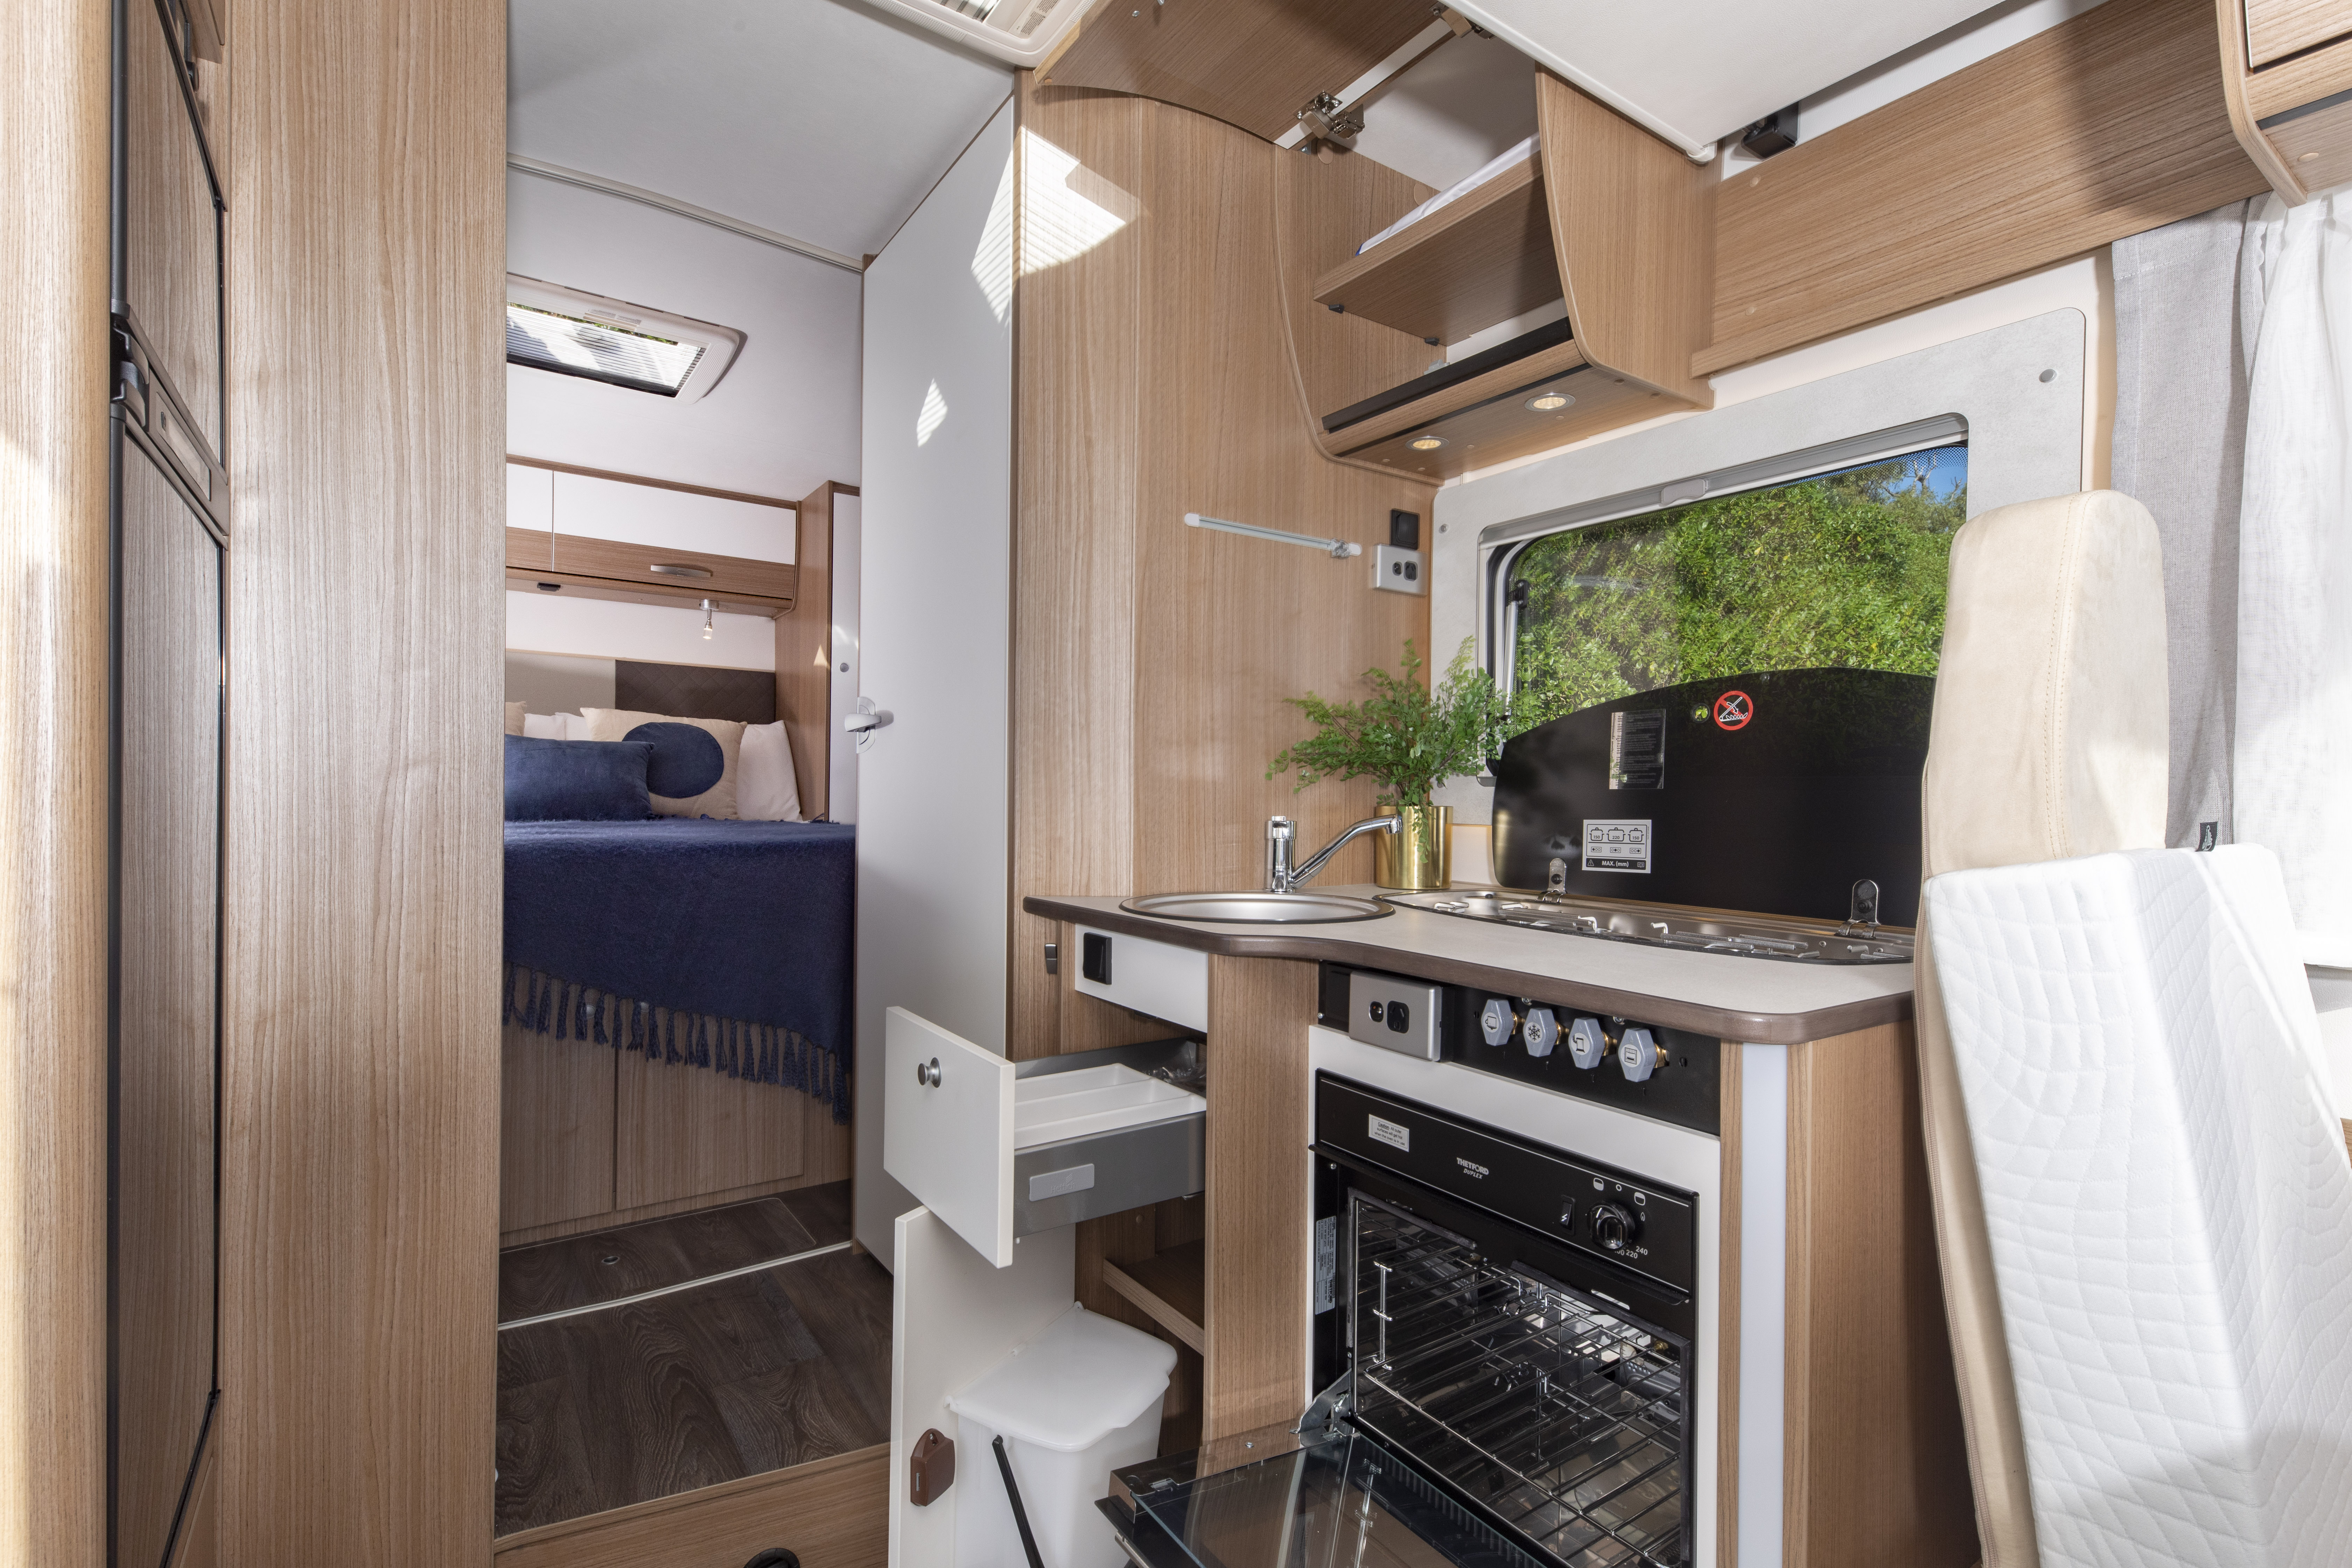 Wilderness 2022 Carado T459 motorhome interior kitchen to bedroom